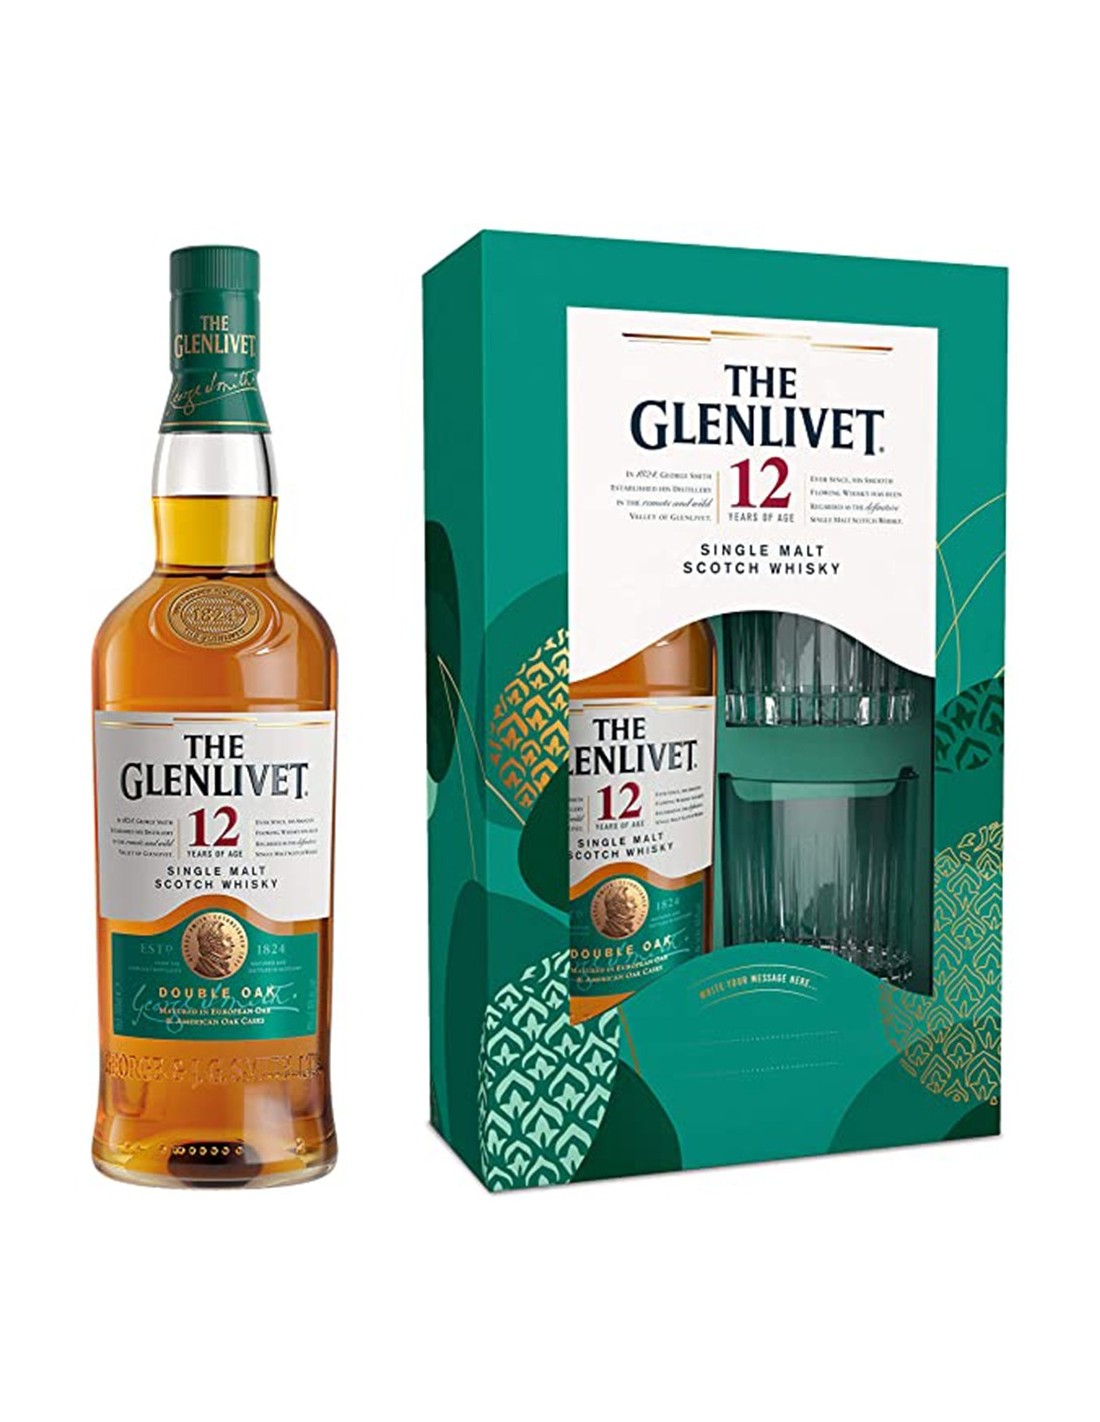 Whisky The Glenlivet 12 ani Double Oak + 2 pahare, 0.7L, 40% alc., Scotia alcooldiscount.ro